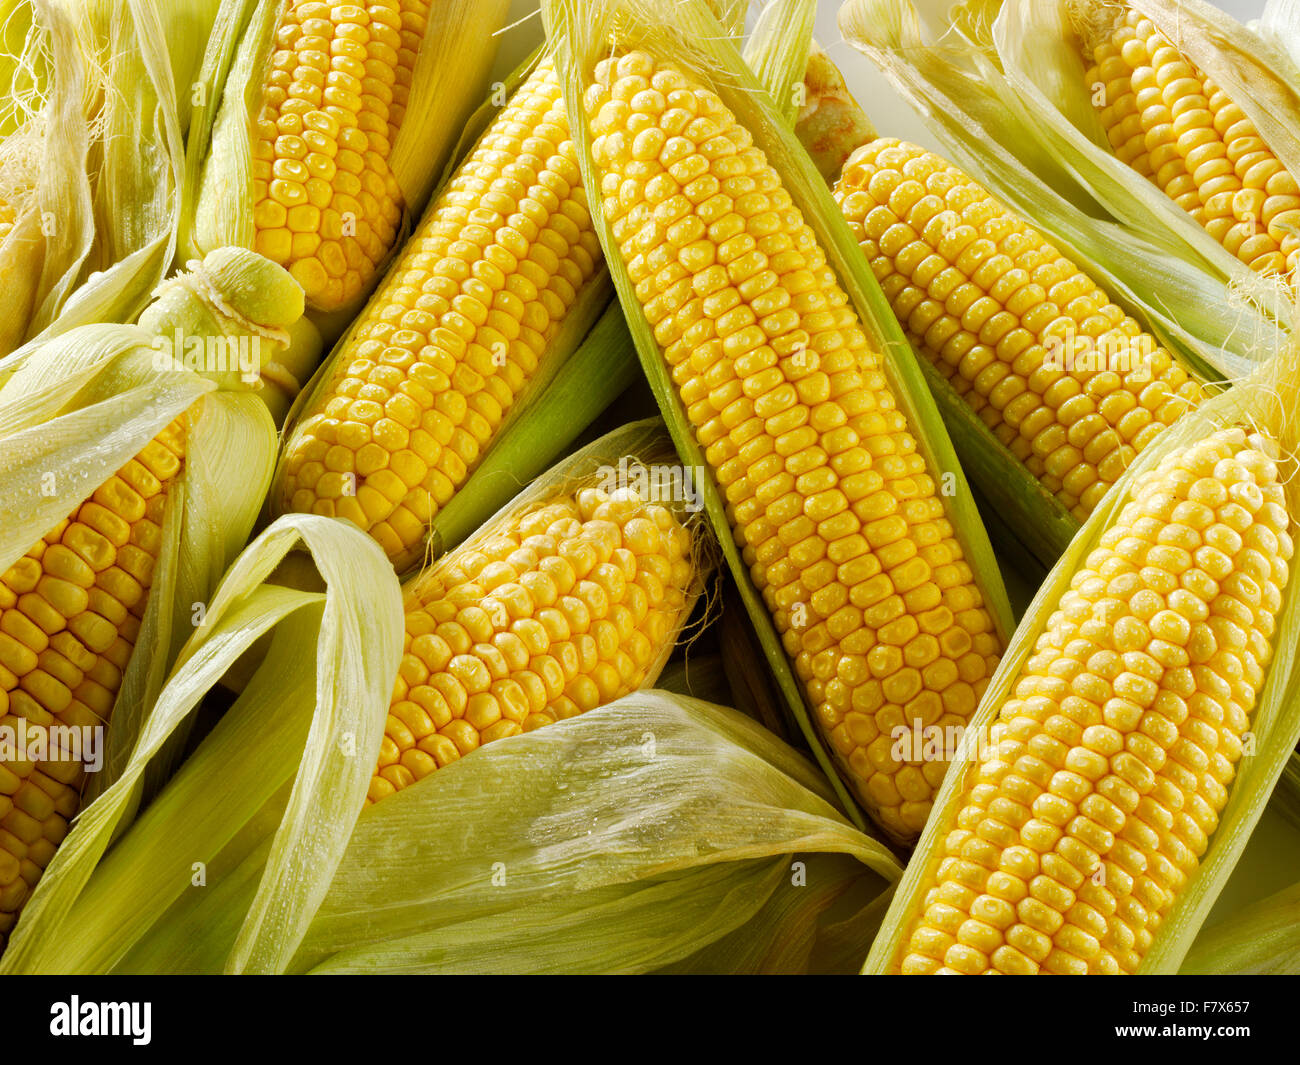 whole fresh sweet corn cobs Stock Photo